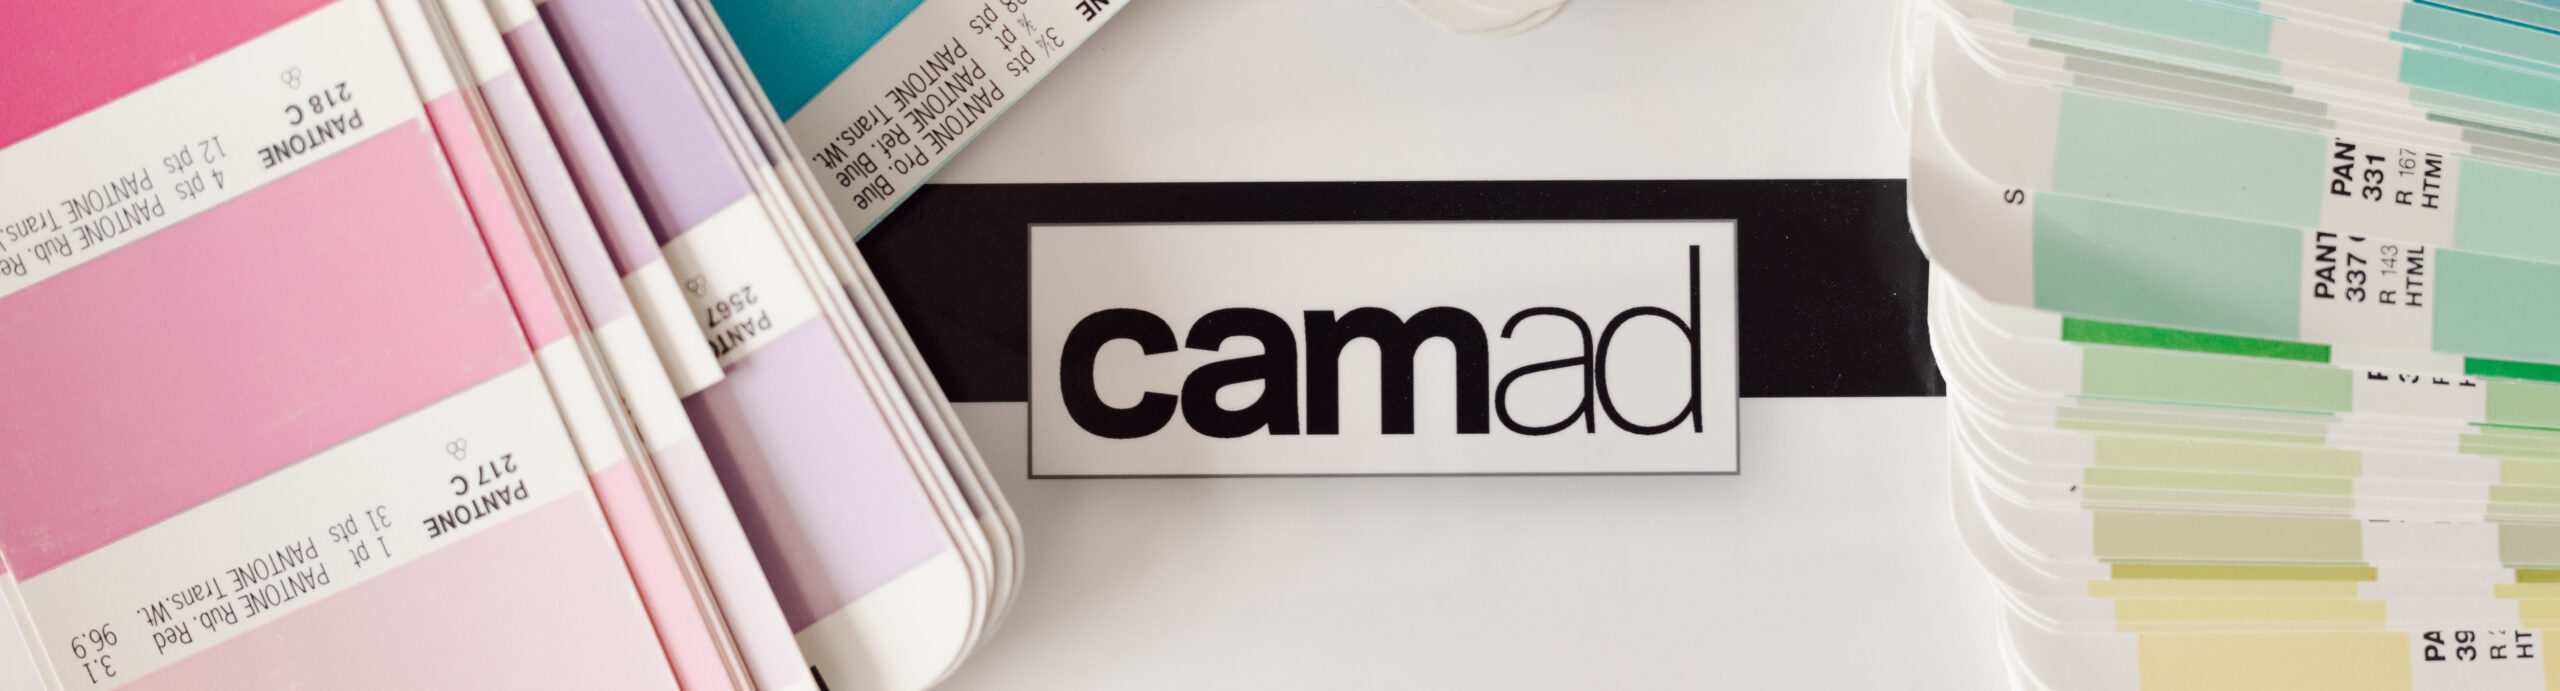 AM-CamAd-0160